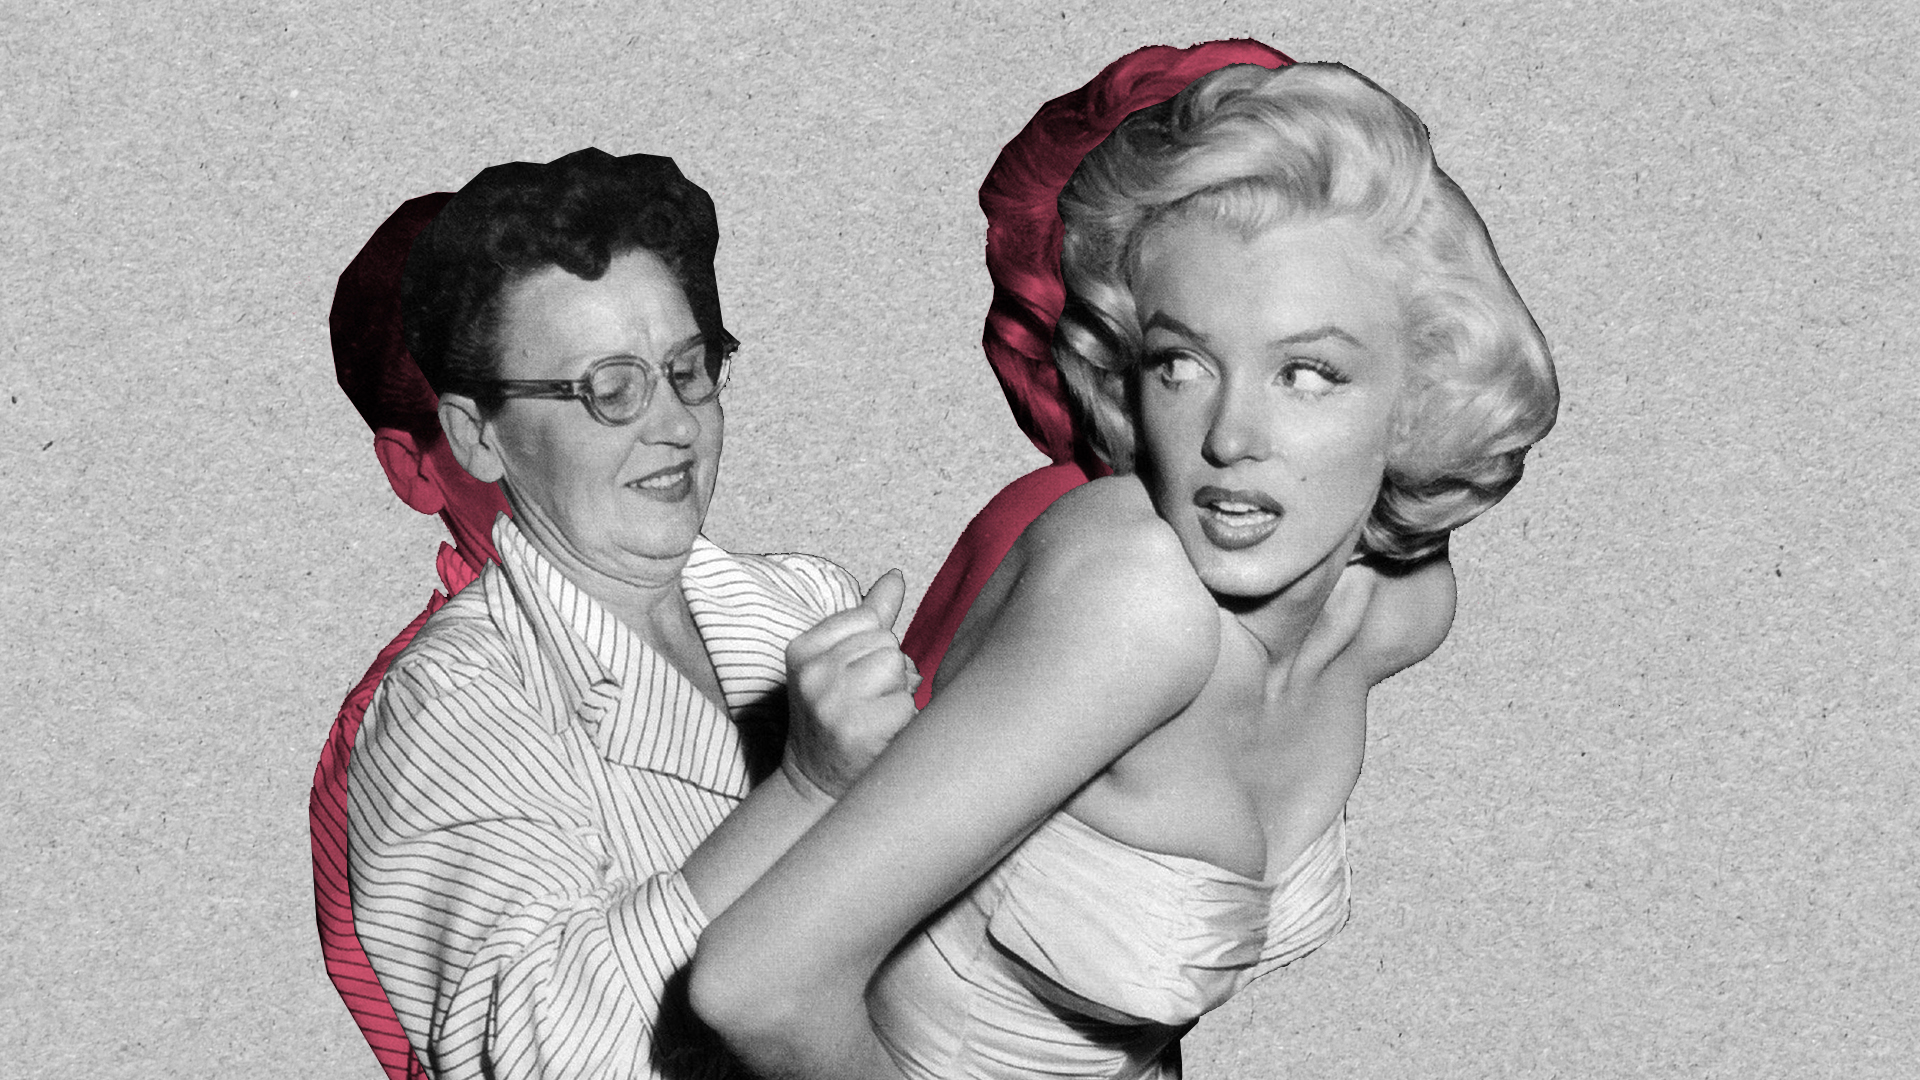 Marilyn Monroe's Girdle: Why Modern Ladies Should Embrace Wearing Shapewear